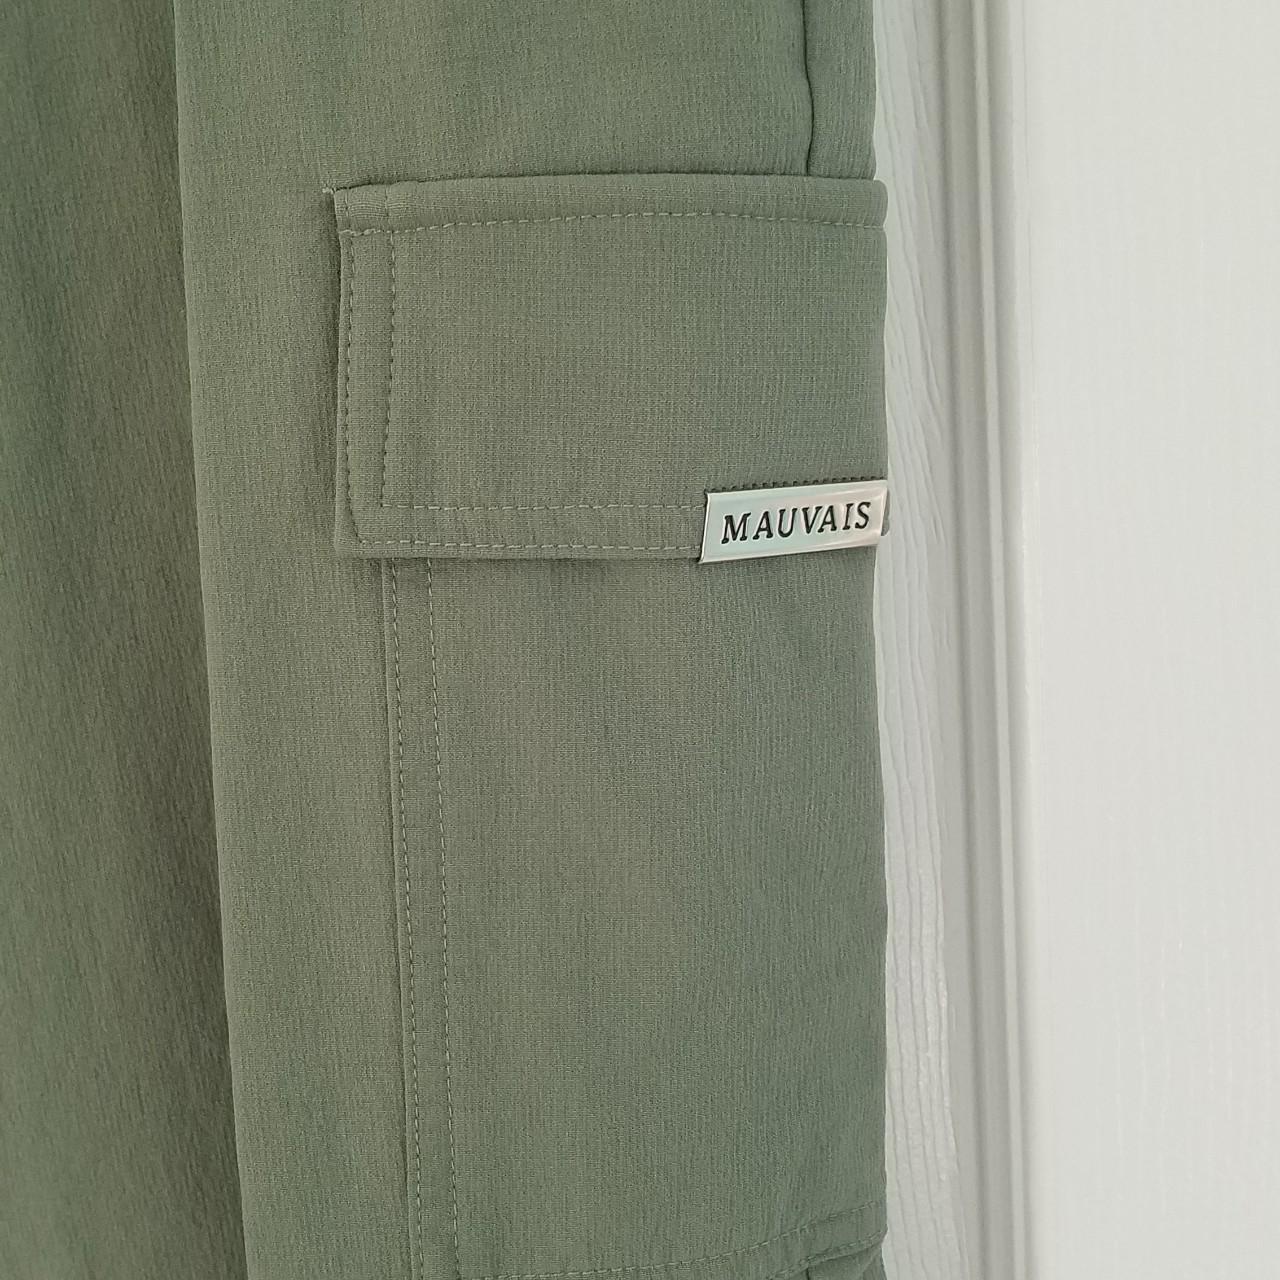 Product Image 3 - Mauvais green pants size 30